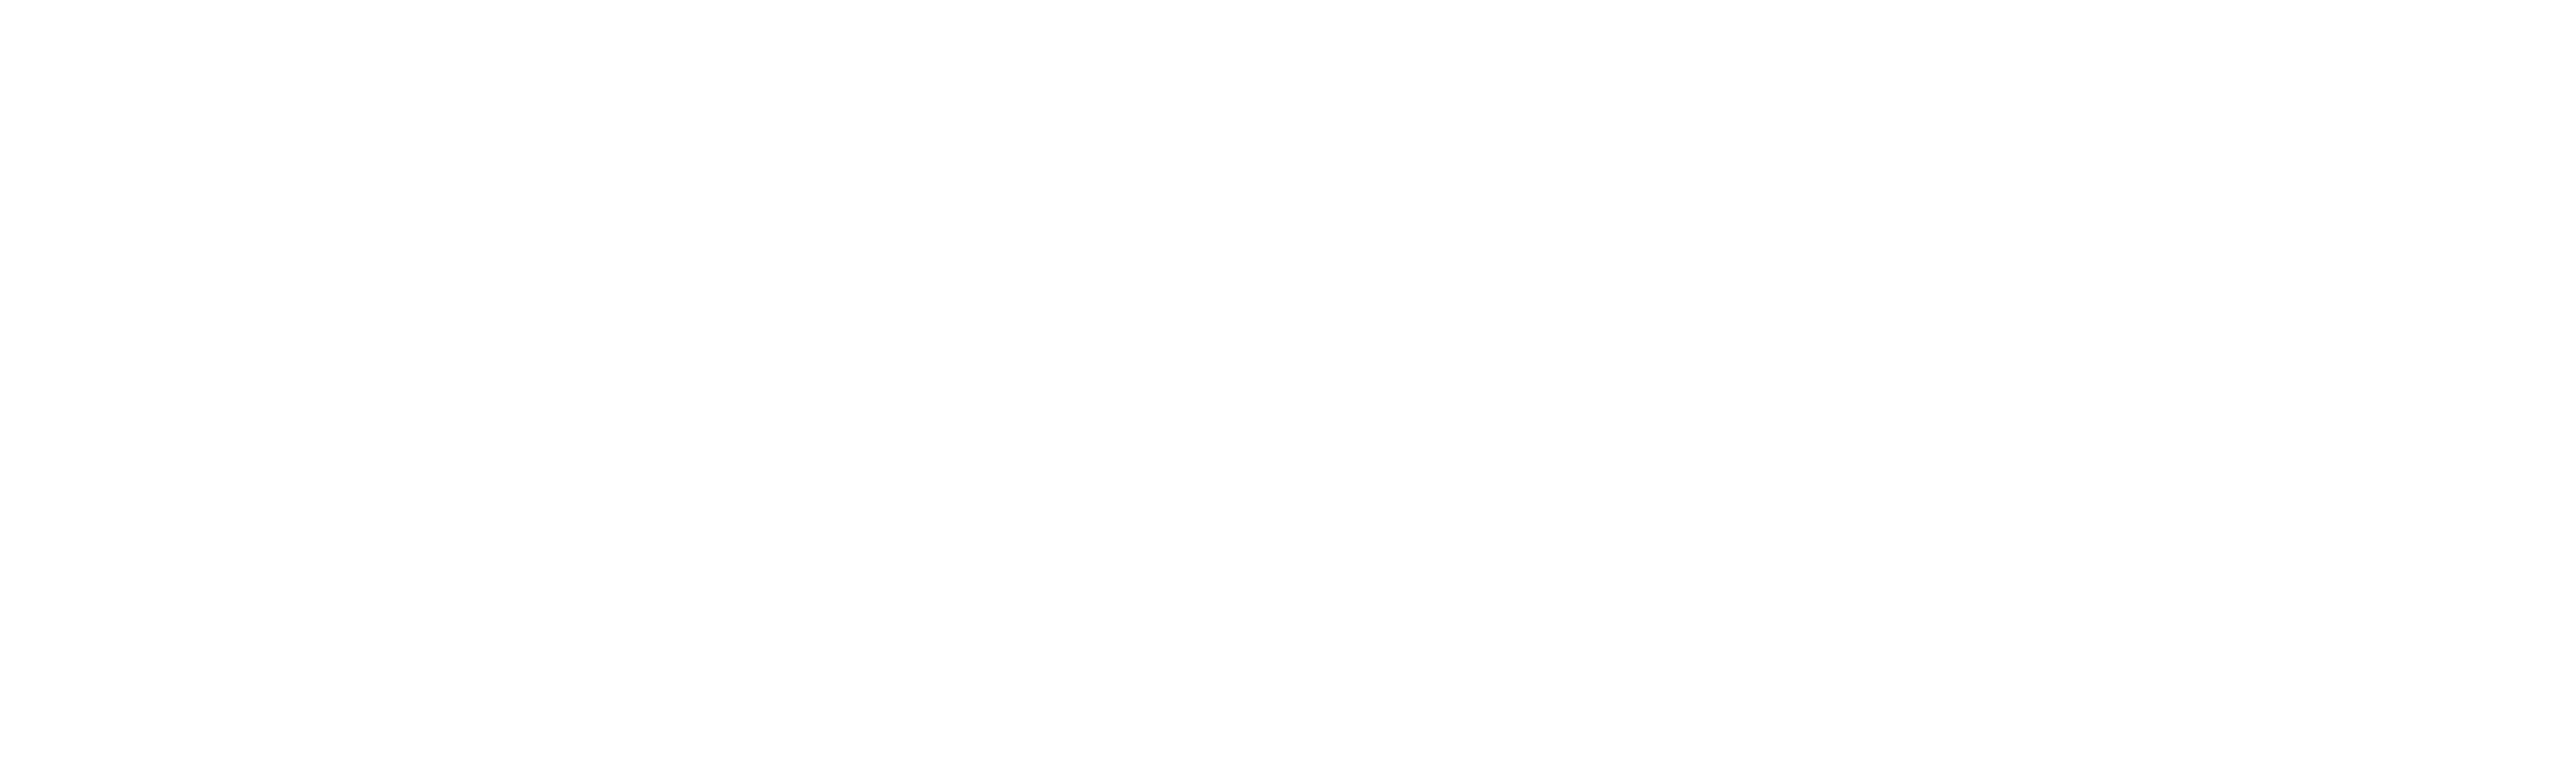 C.B. Strike: Troubled Blood: Season 2 – TV no Google Play